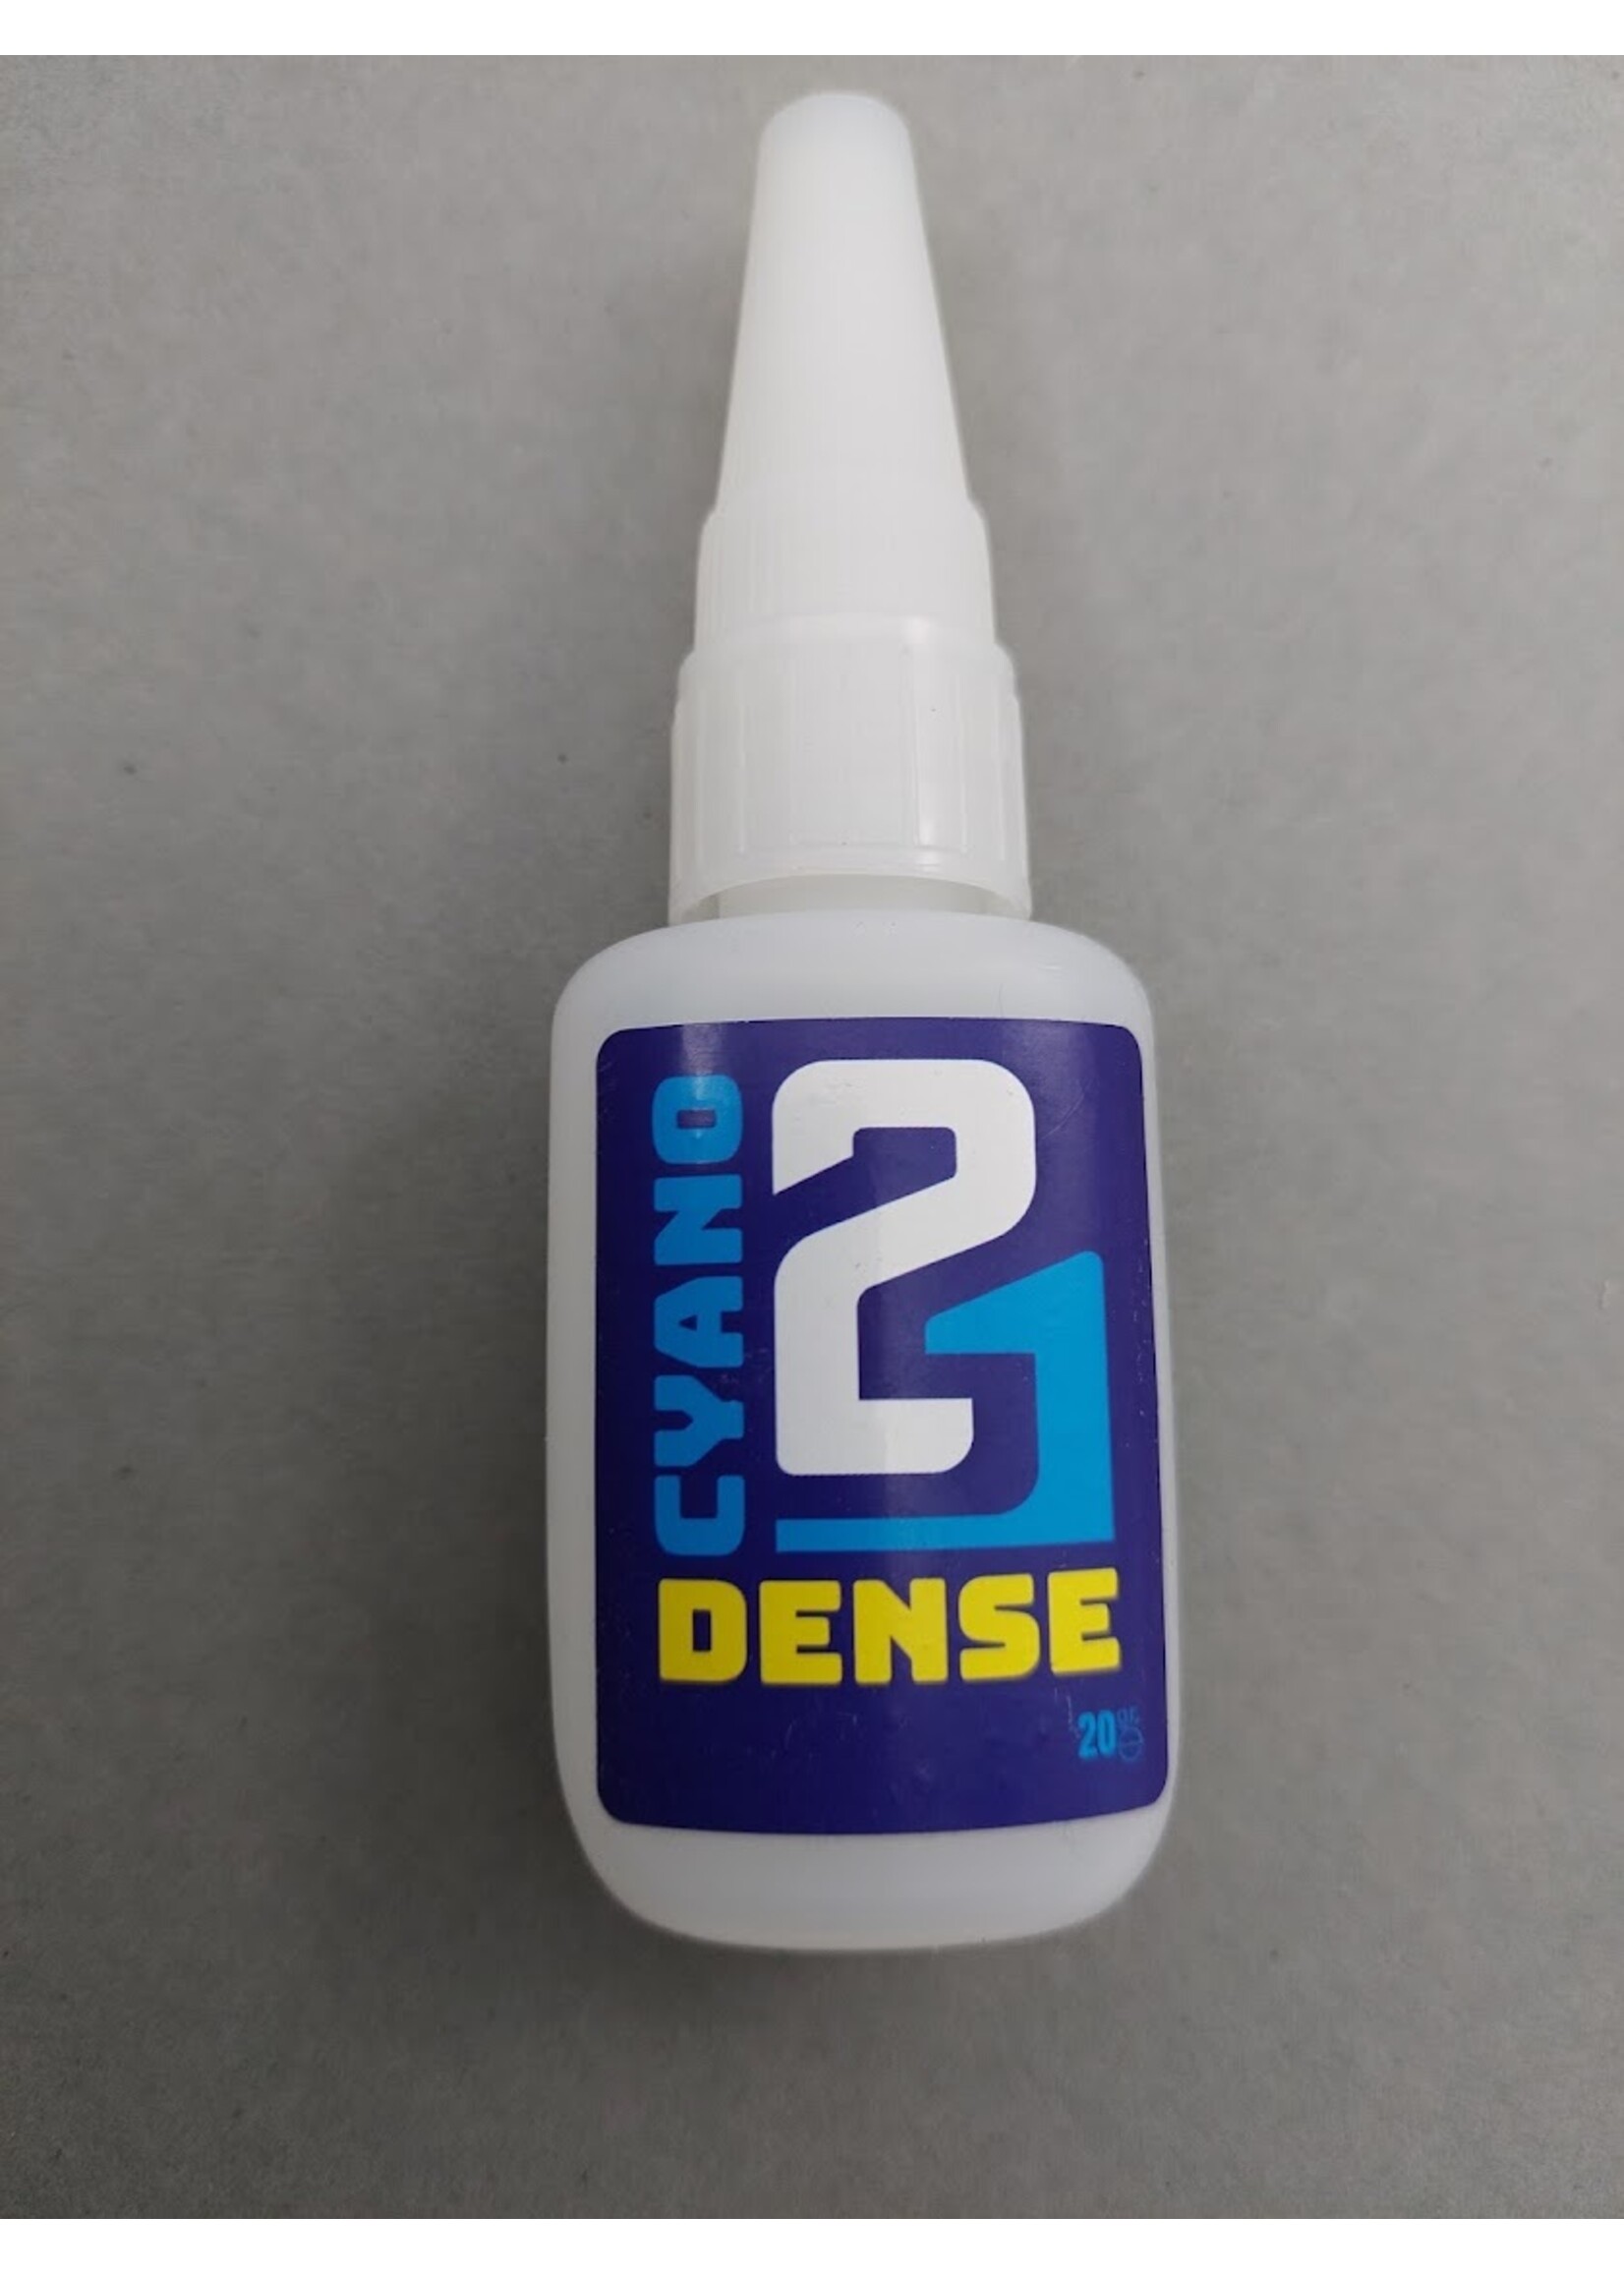 Colle 21 Dense - anaerobic cyanoacrylate glue - 20 gram - Mark's Miniatures